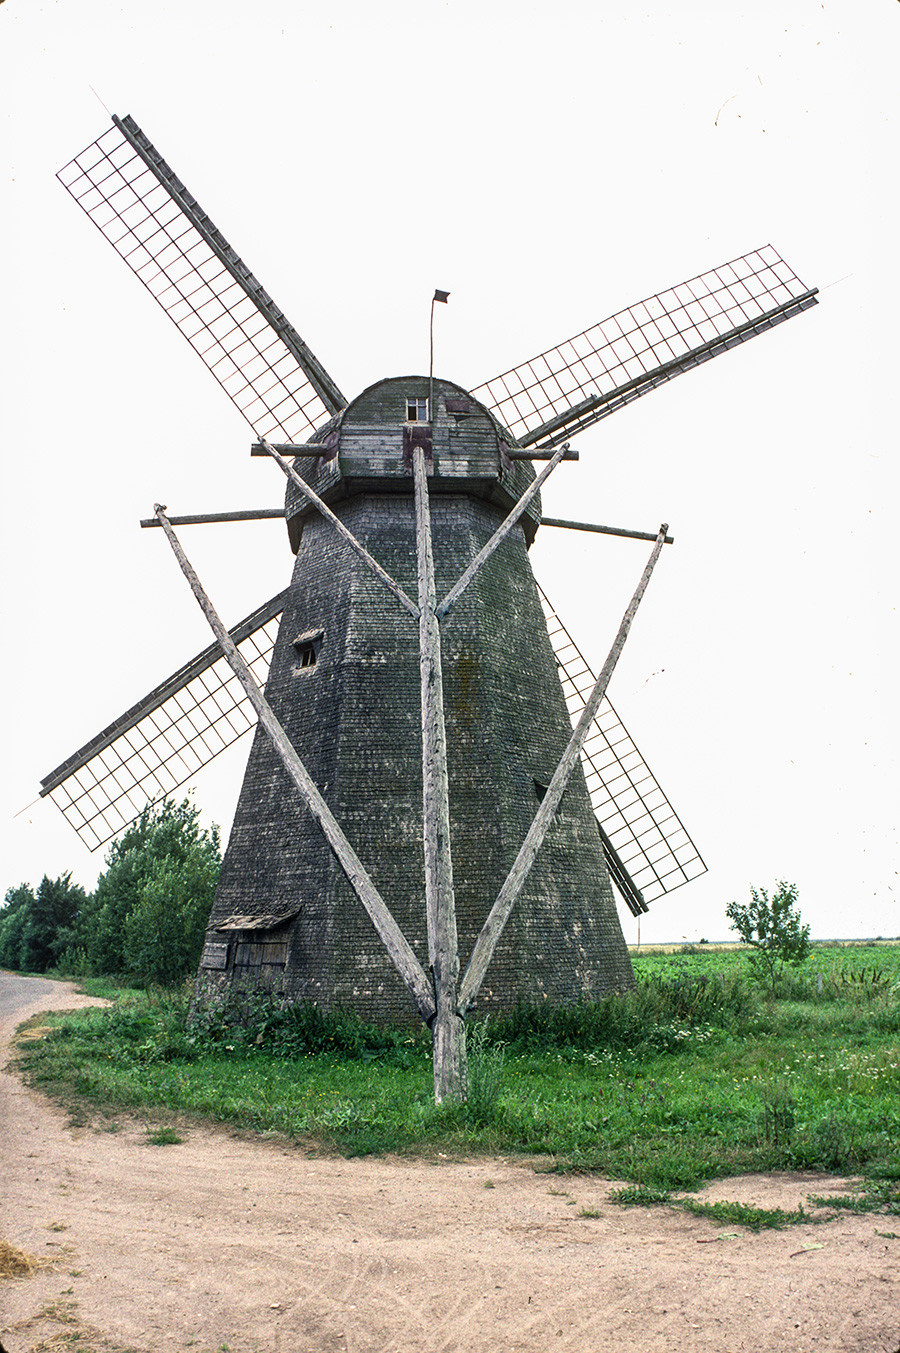  Seltso (Novgorod Region). Tower windmill, back view. August 11, 1994